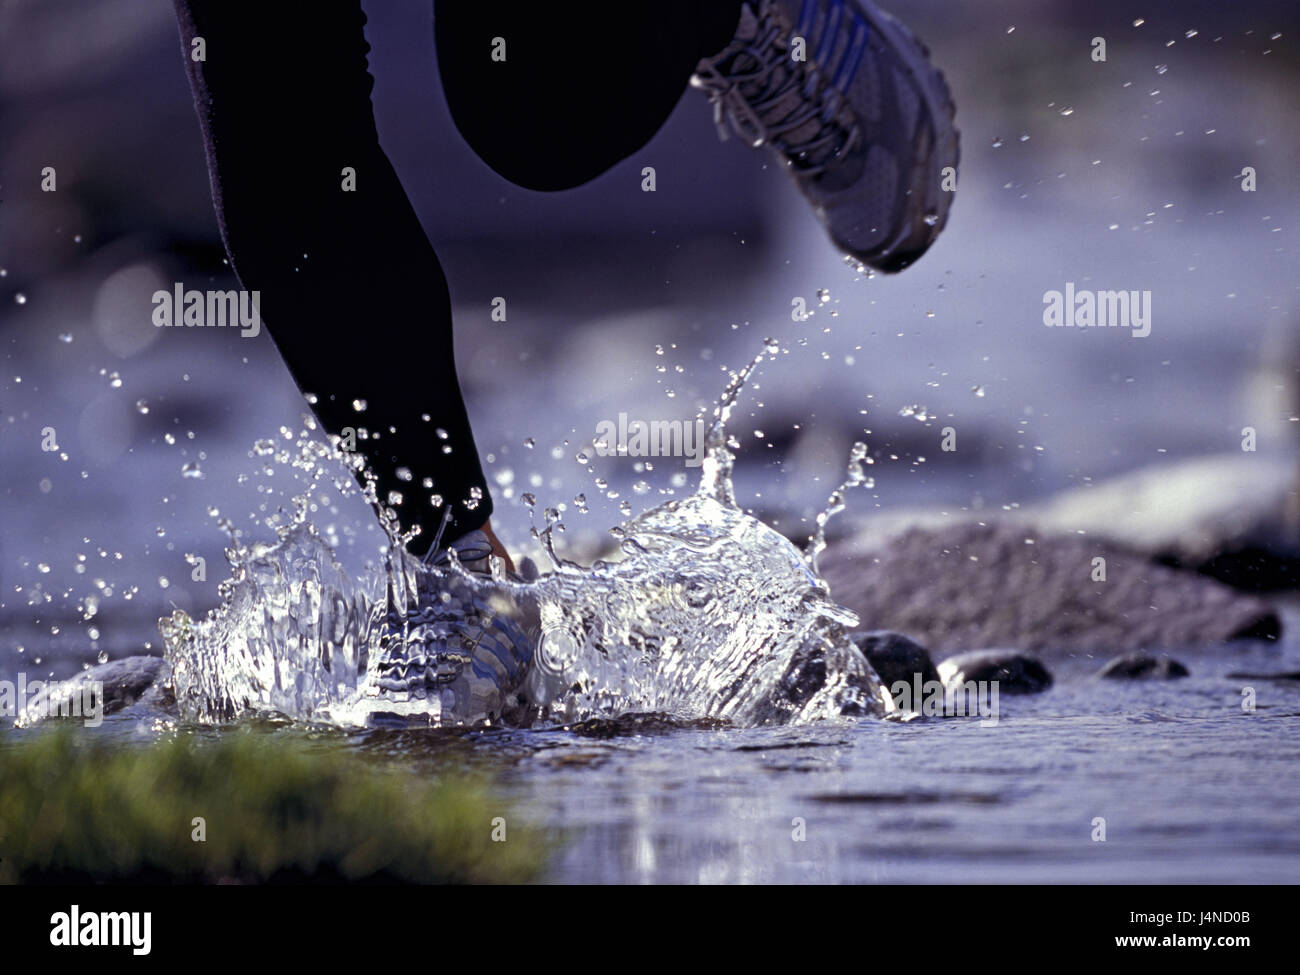 Italien, Jogger, laufen, Wasser, Turnschuhe, mittlere Nahaufnahme, Kerbe Stockfoto